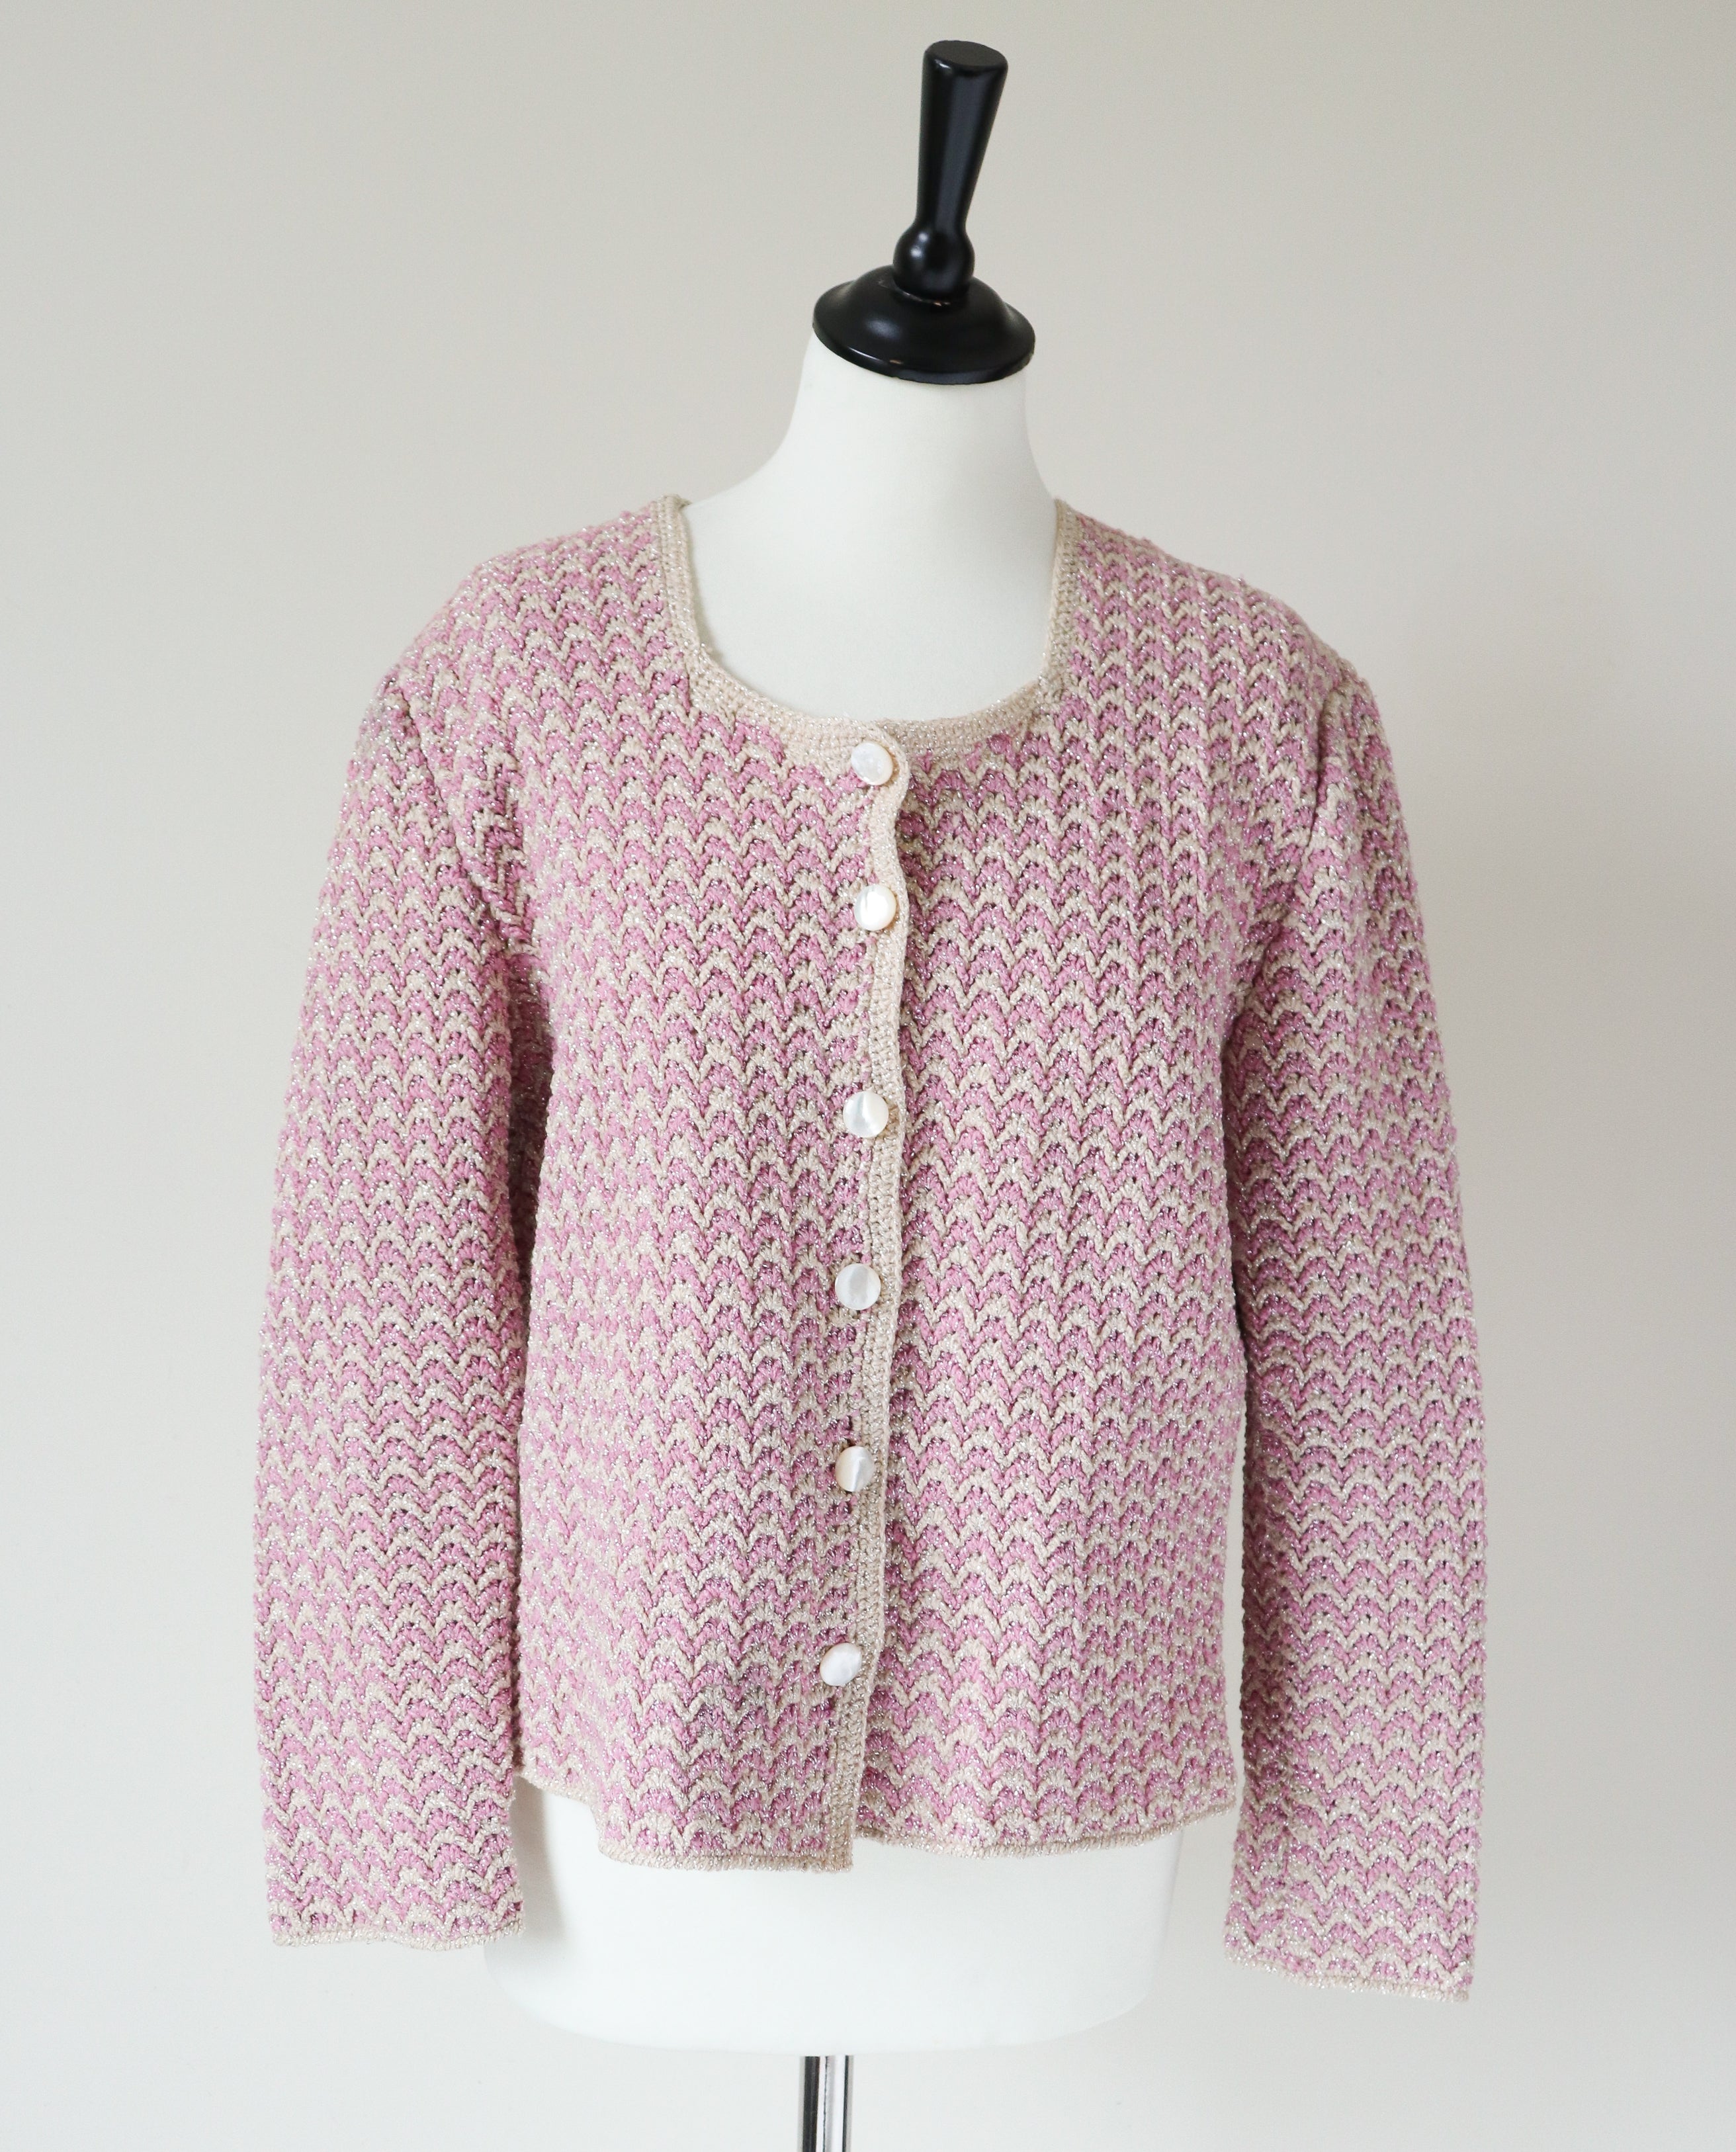 Vintage Cardigan / Knitted Jacket - Handmade Sparkly Silver / Pink -  M/ L -  UK 12 / 14